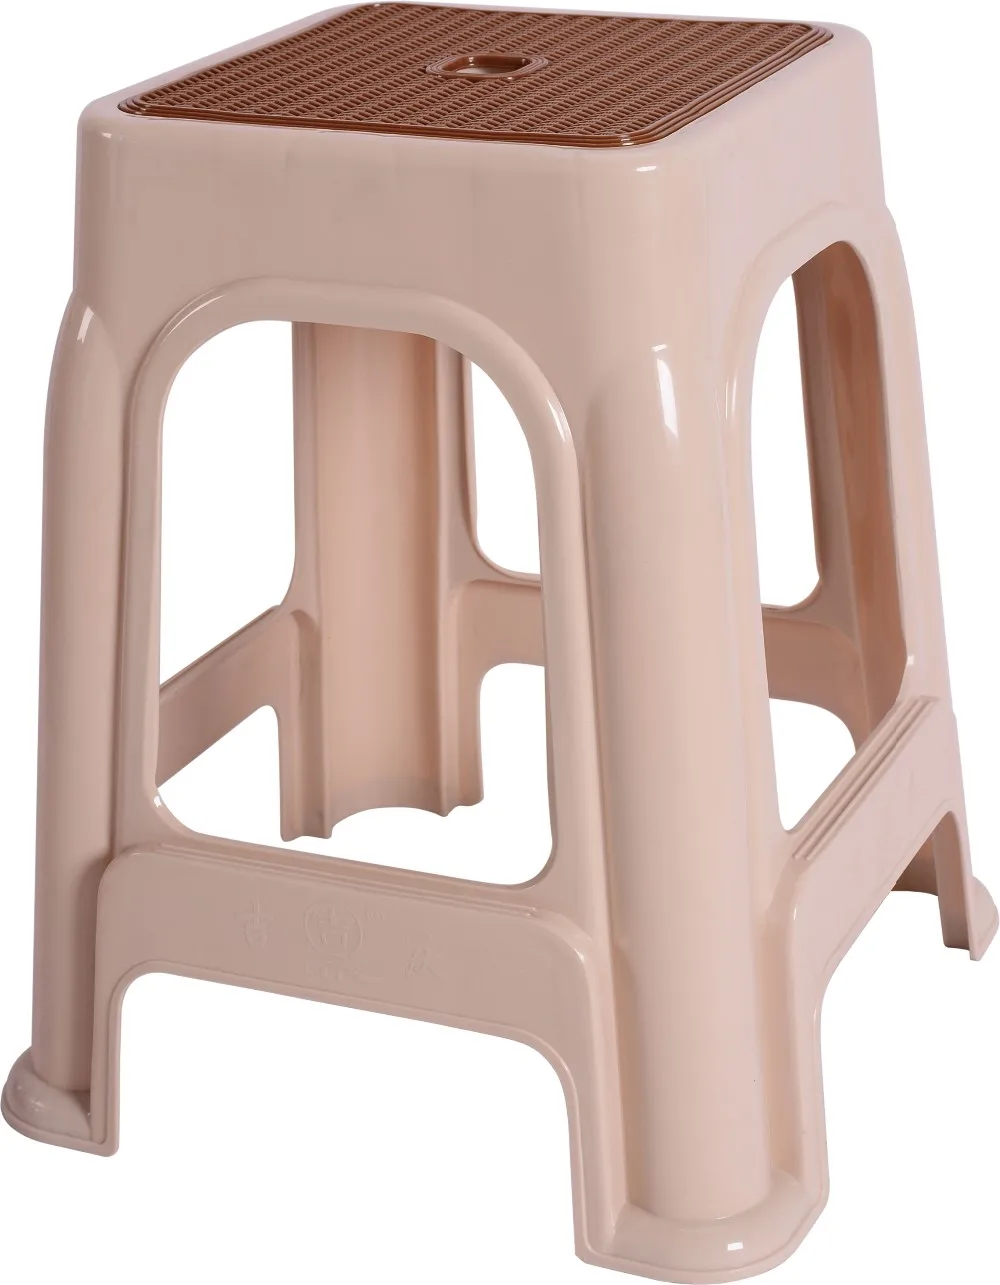 Best Price Stackable Plastic Sitting Stool - Buy Stackable Plastic